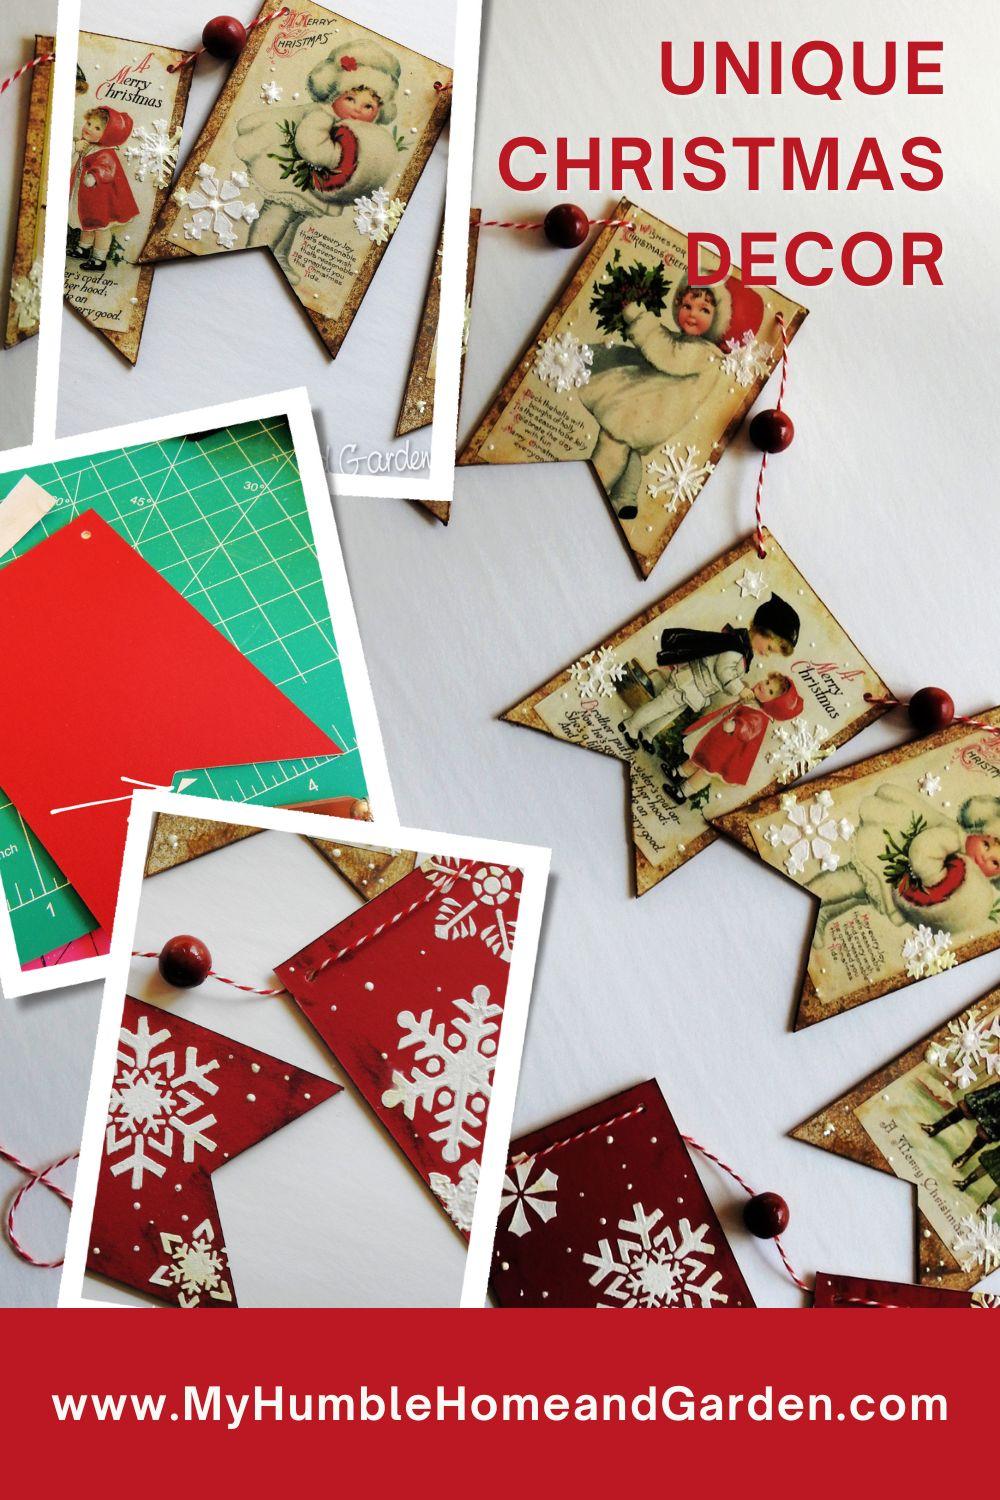 Retro Christmas Decoration Ads Crafting Mod Podge Gift Wrap